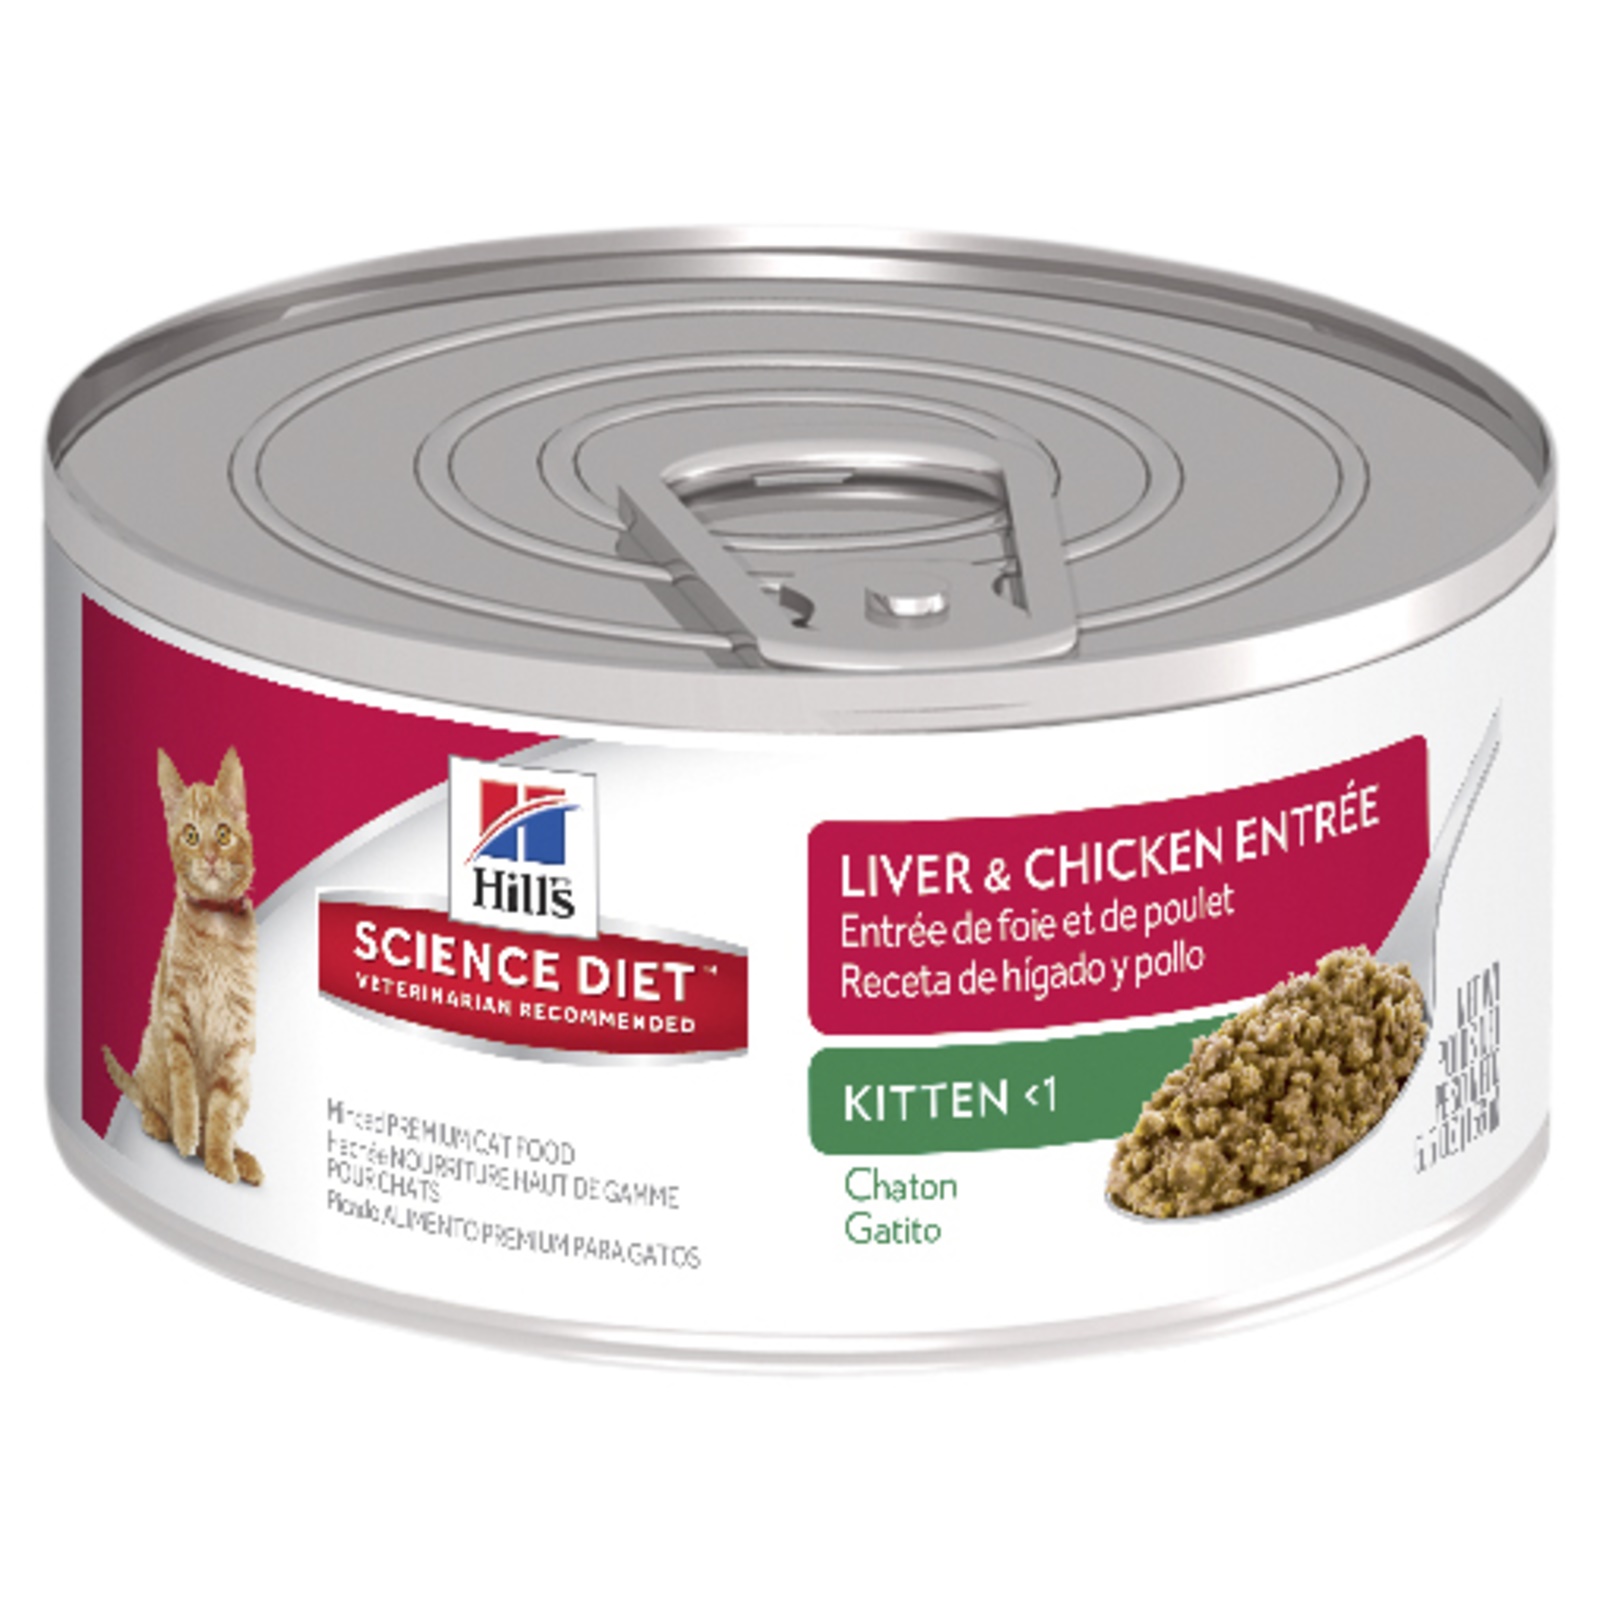 Hills Science Diet Feline Kitten Liver & Chicken Entrée Wet Cat Food